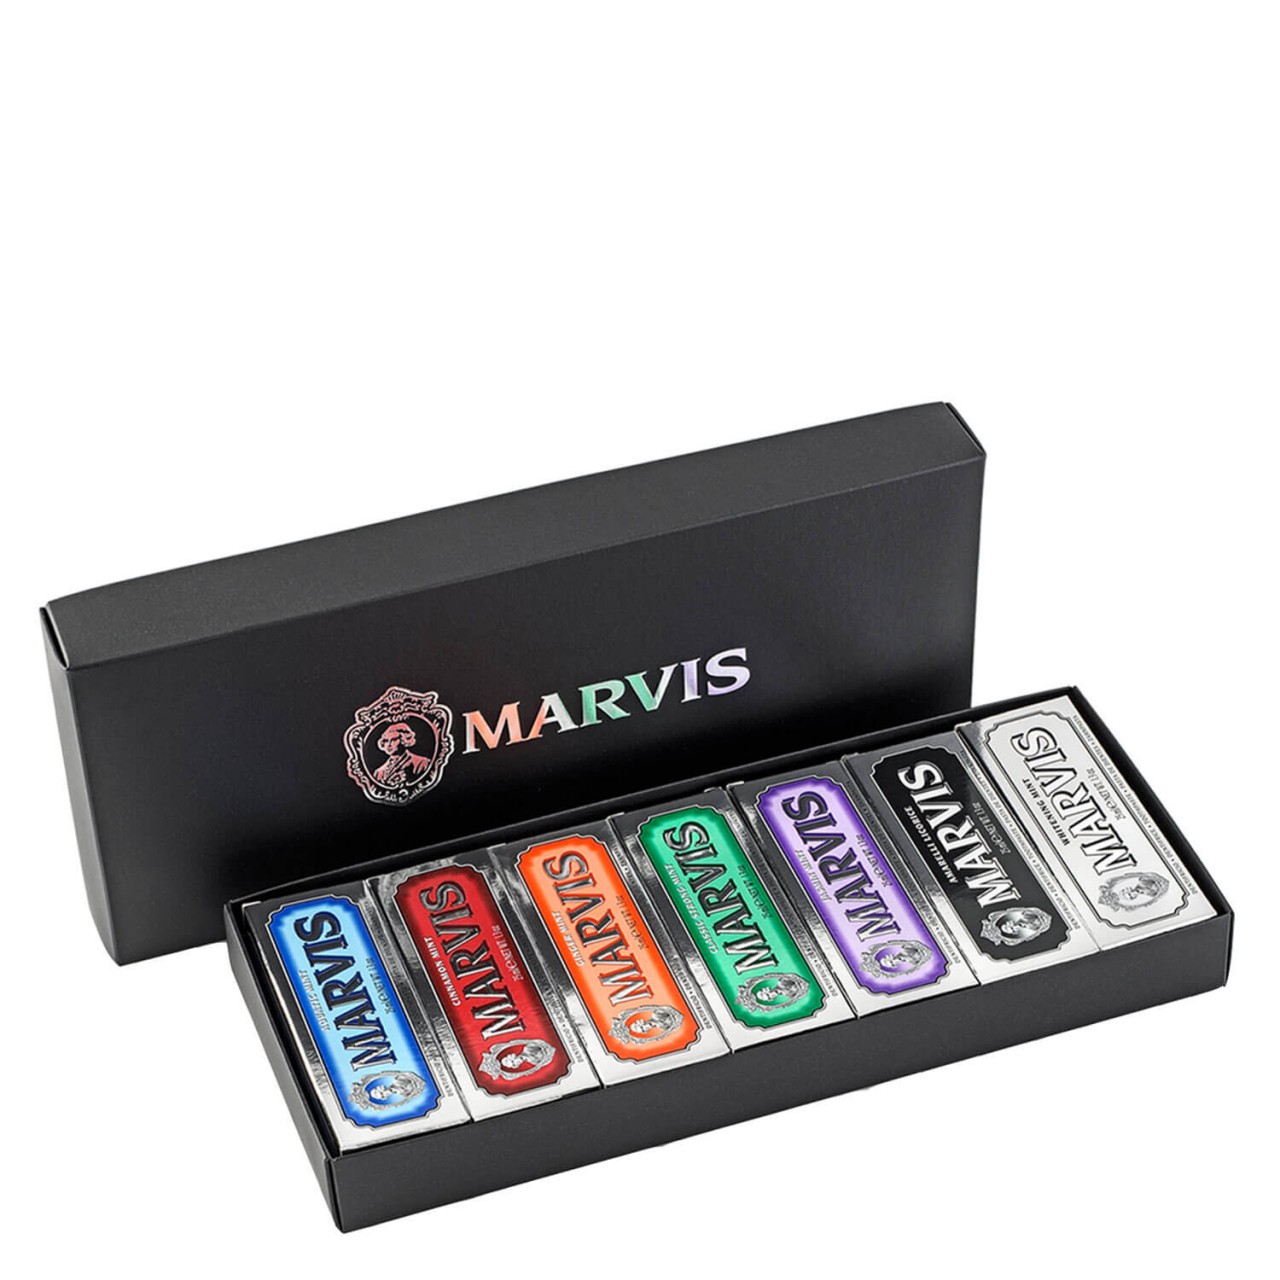 Marvis - 7 Flavours Box von Marvis